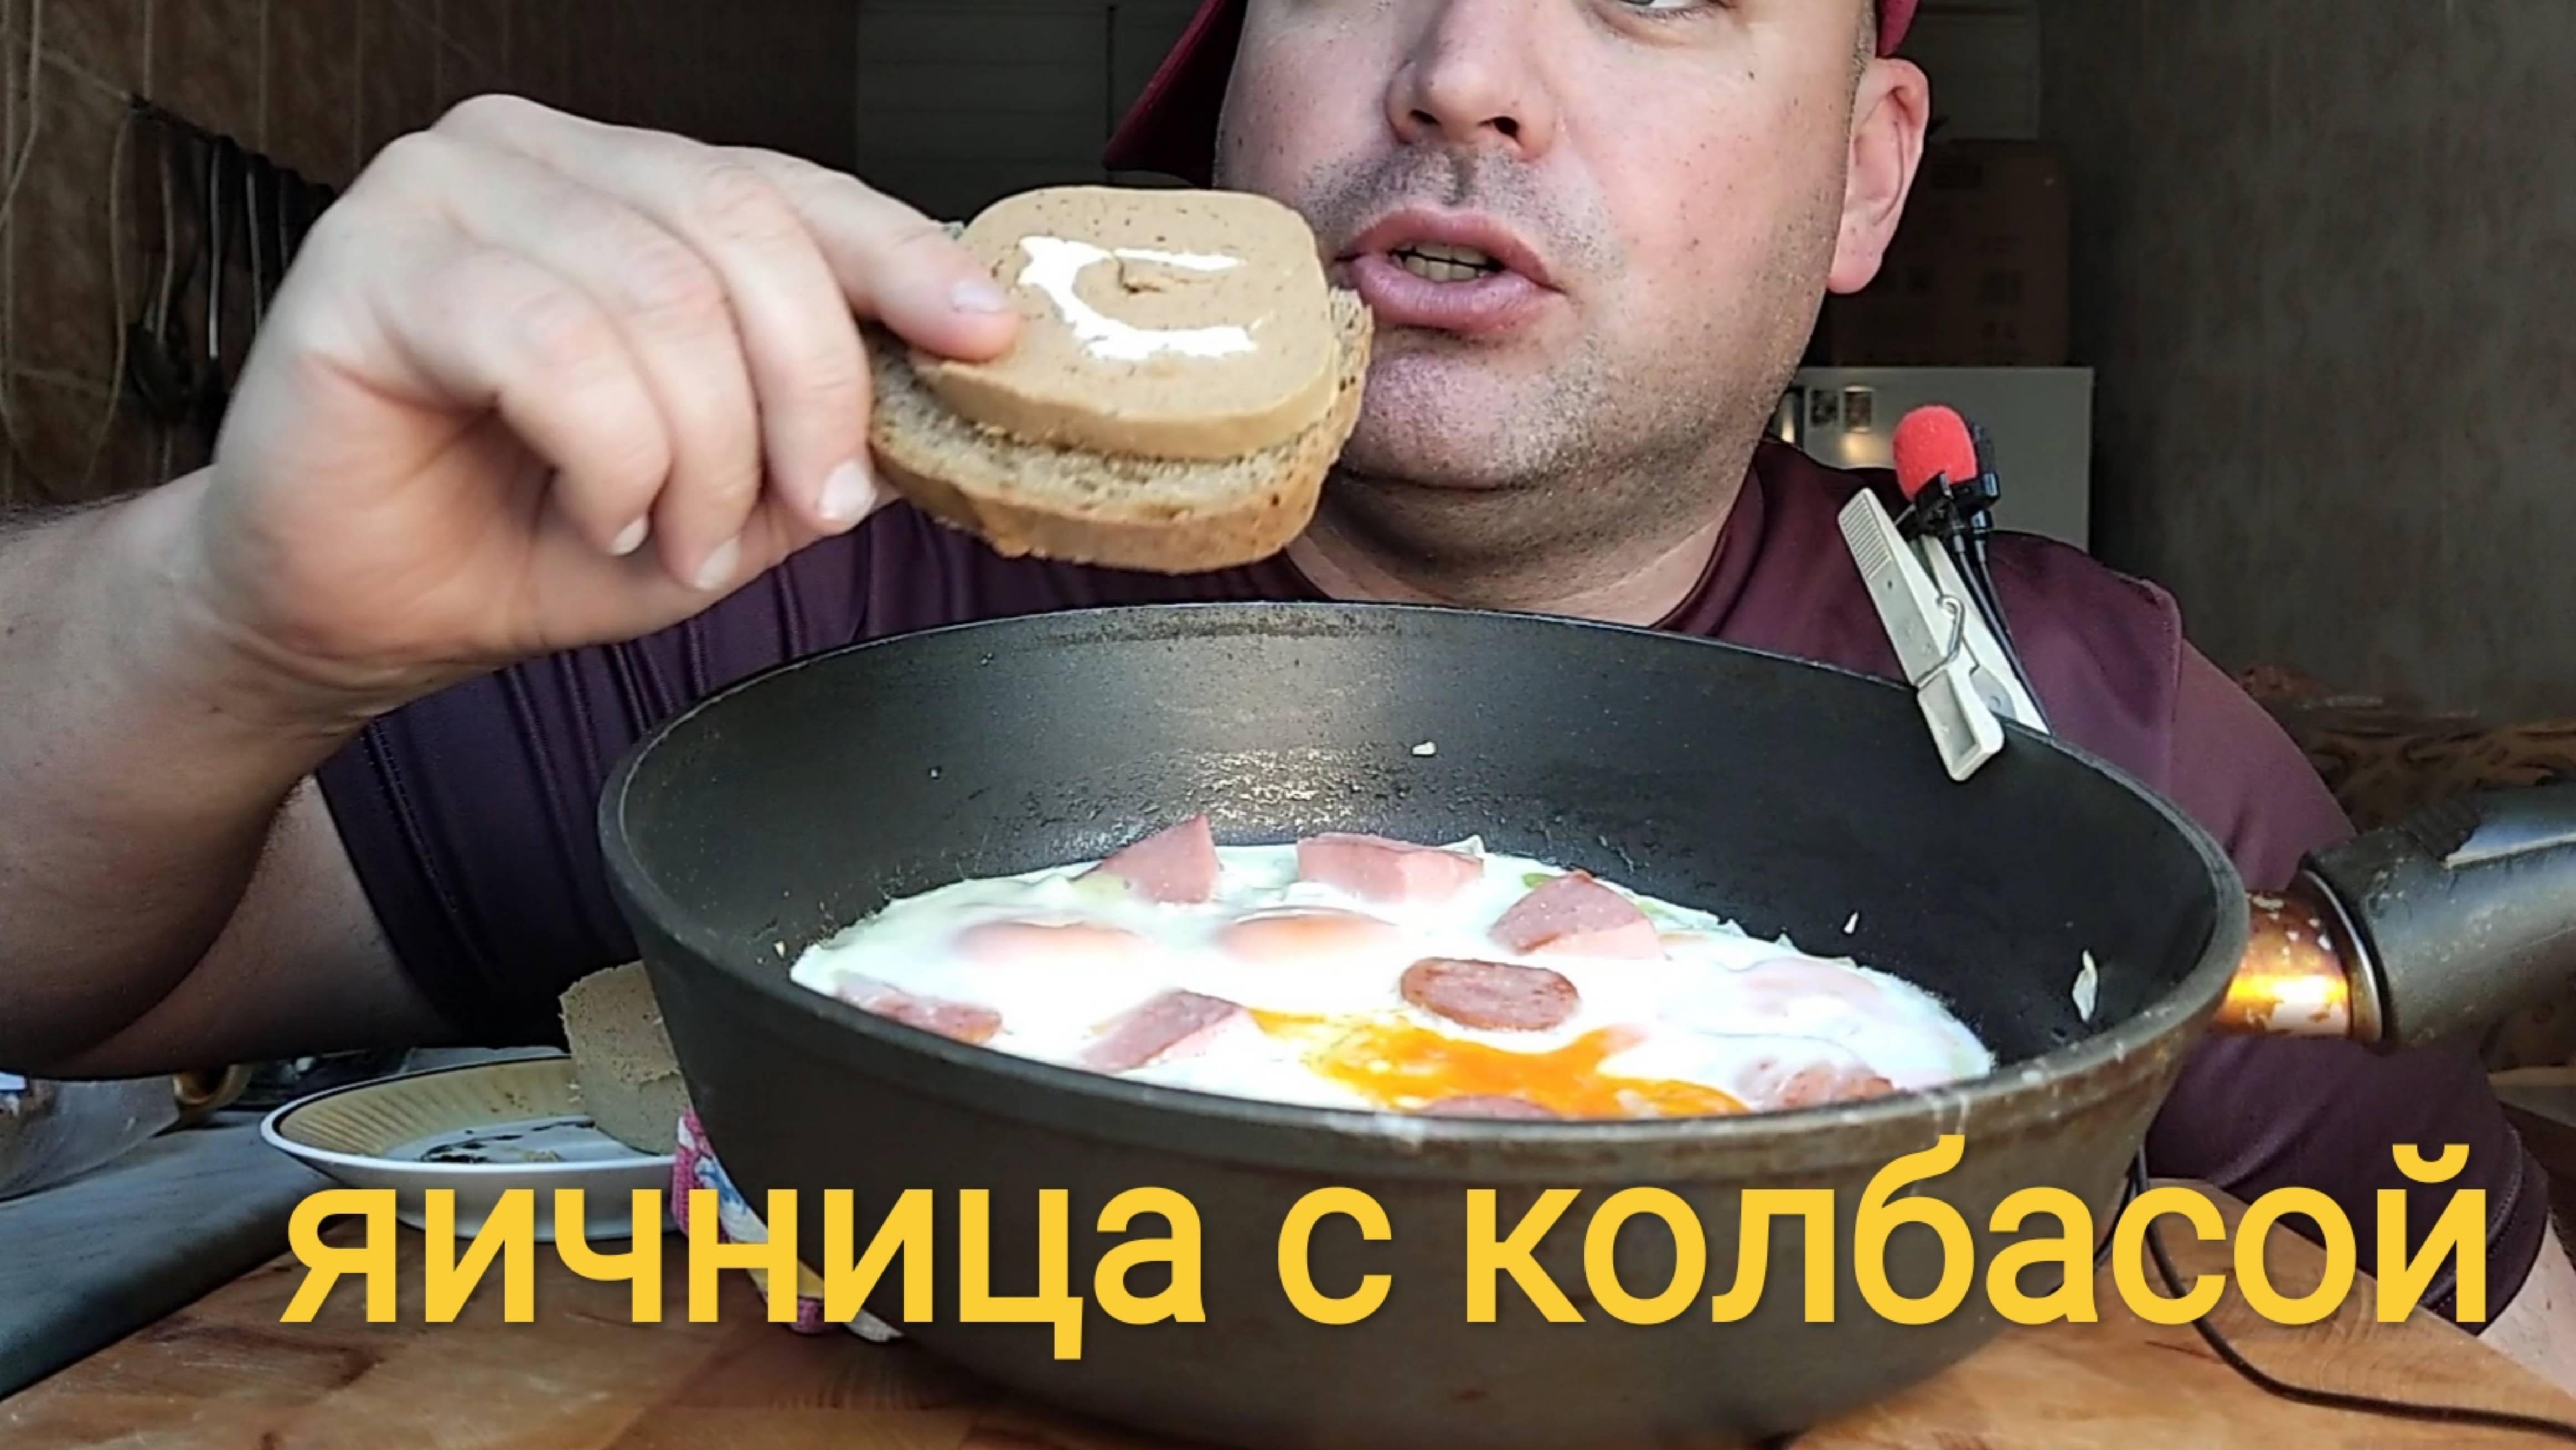 ОБЖОР яичница с колбасой/мукбанг/завтрак/еда на камеру